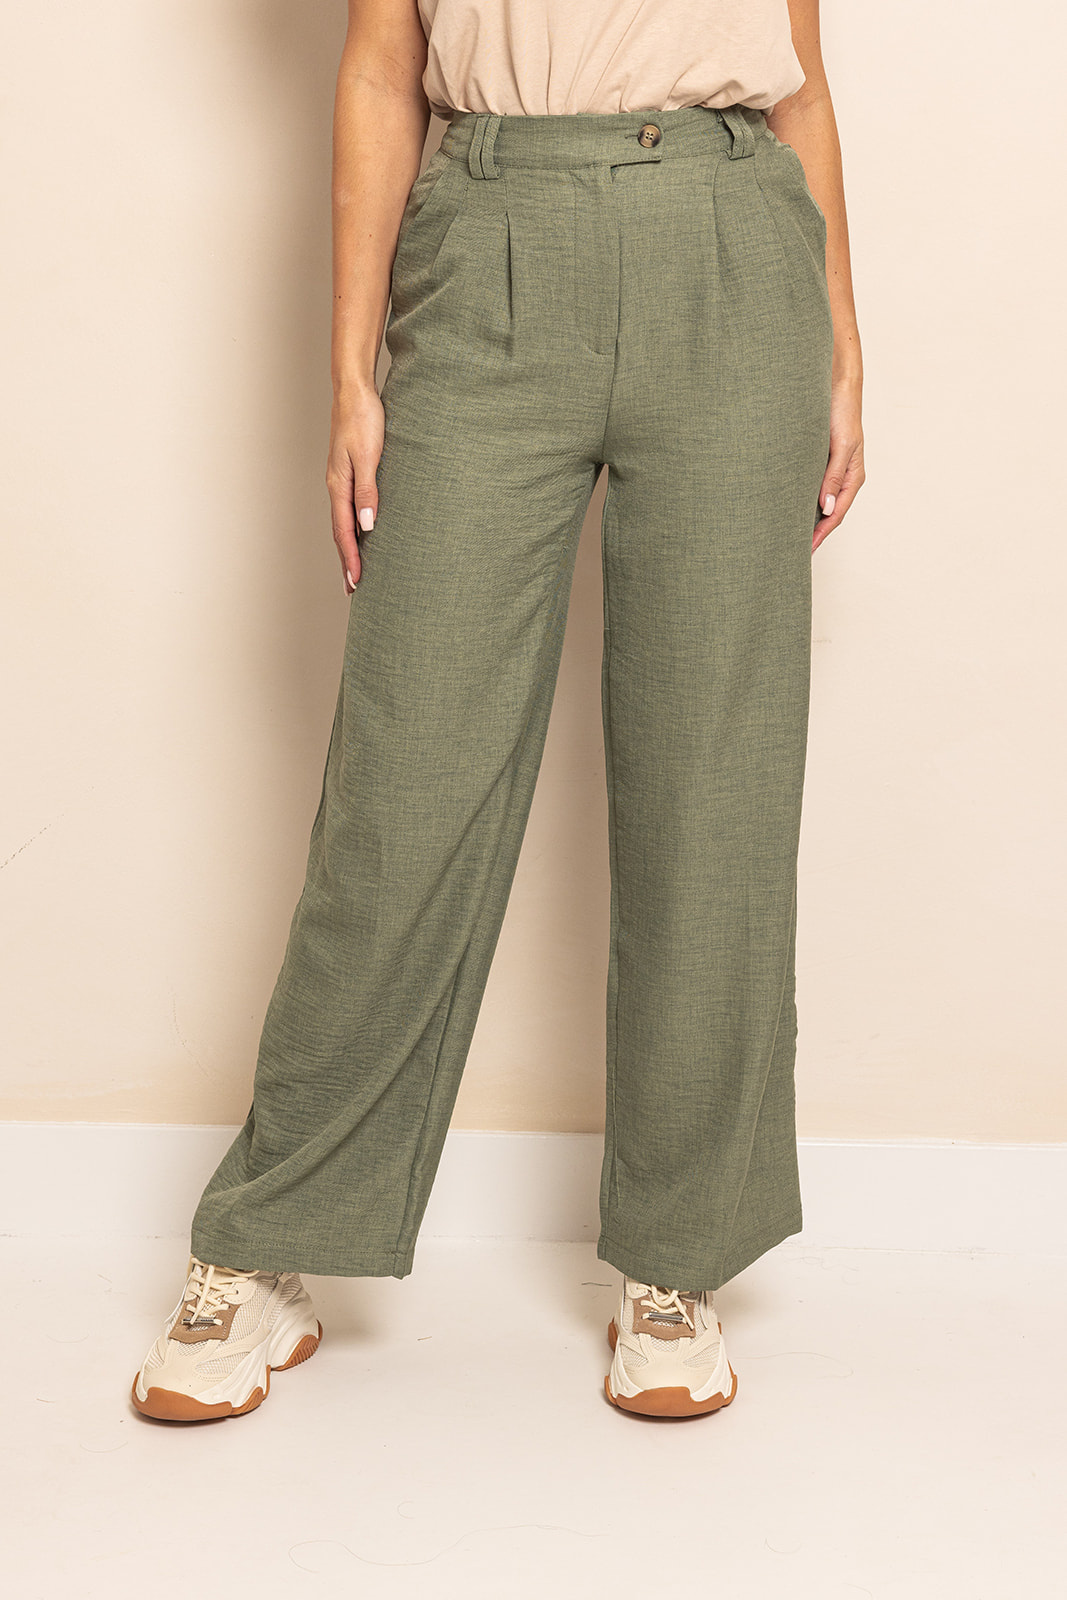 Linde Pantalon | Groen